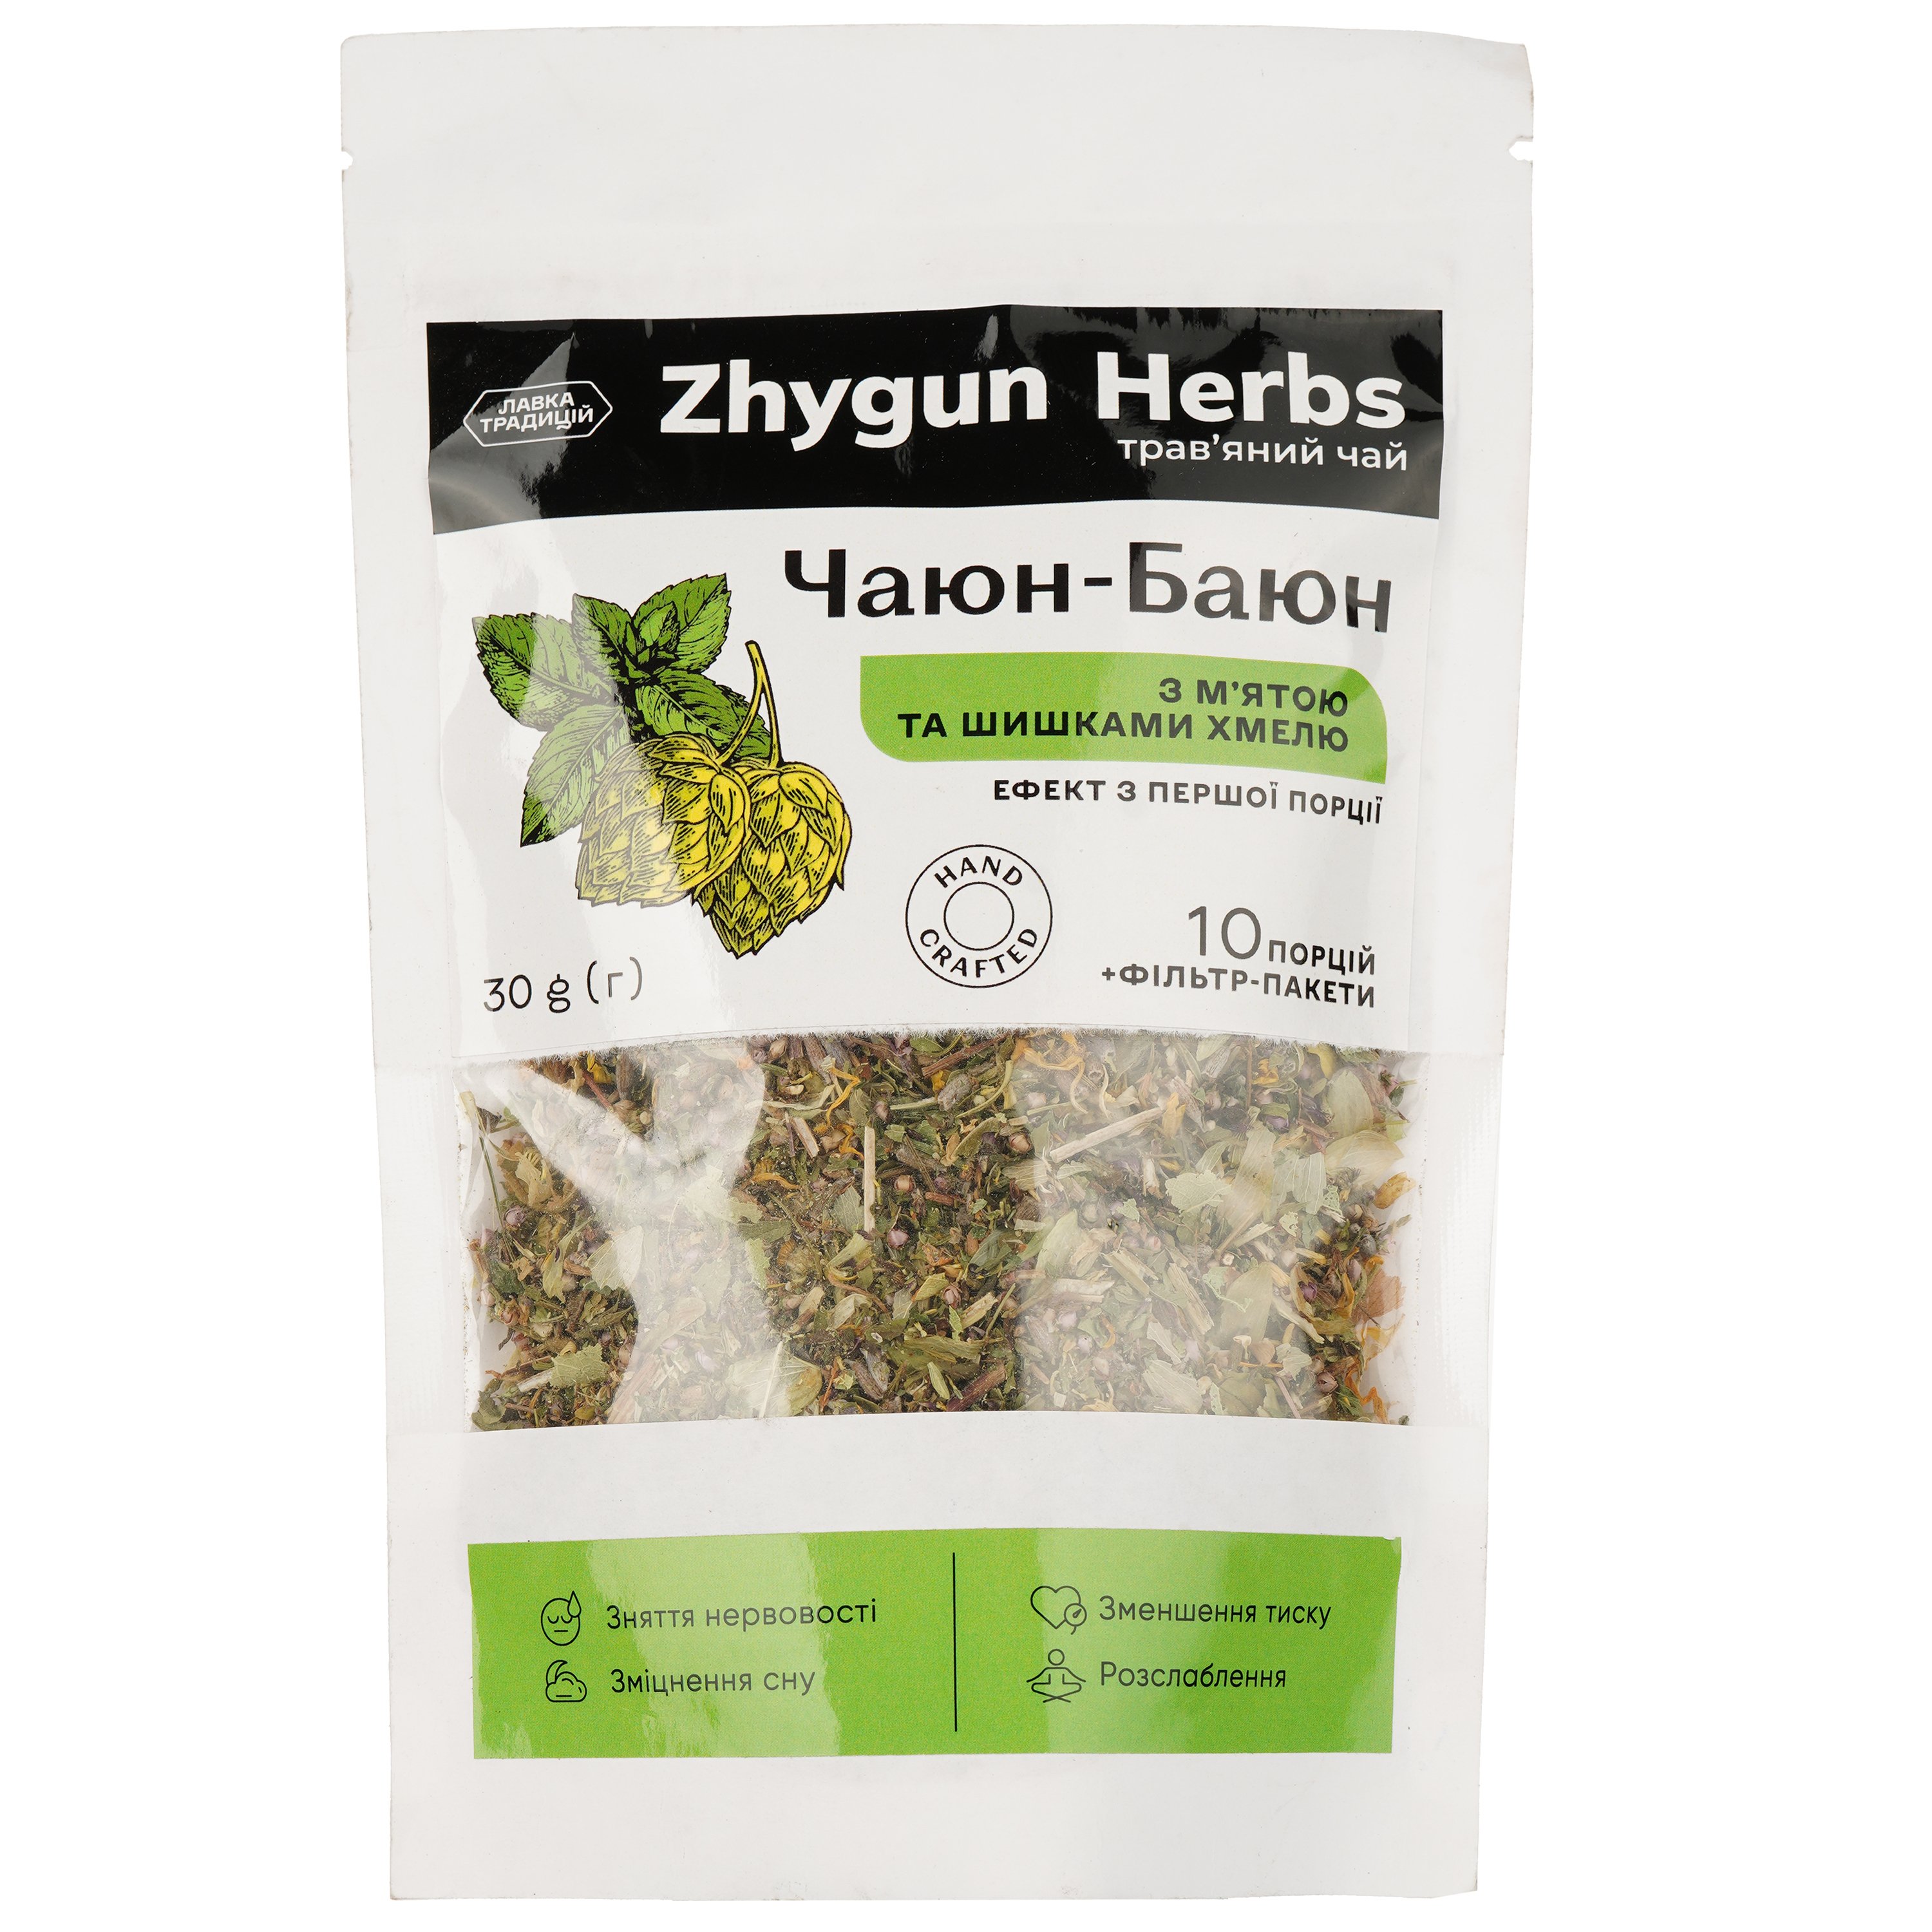 Чай травяной Zhygun Herbs Чаюн-Баюн с мятой и шишками хмеля, 30 г - фото 1